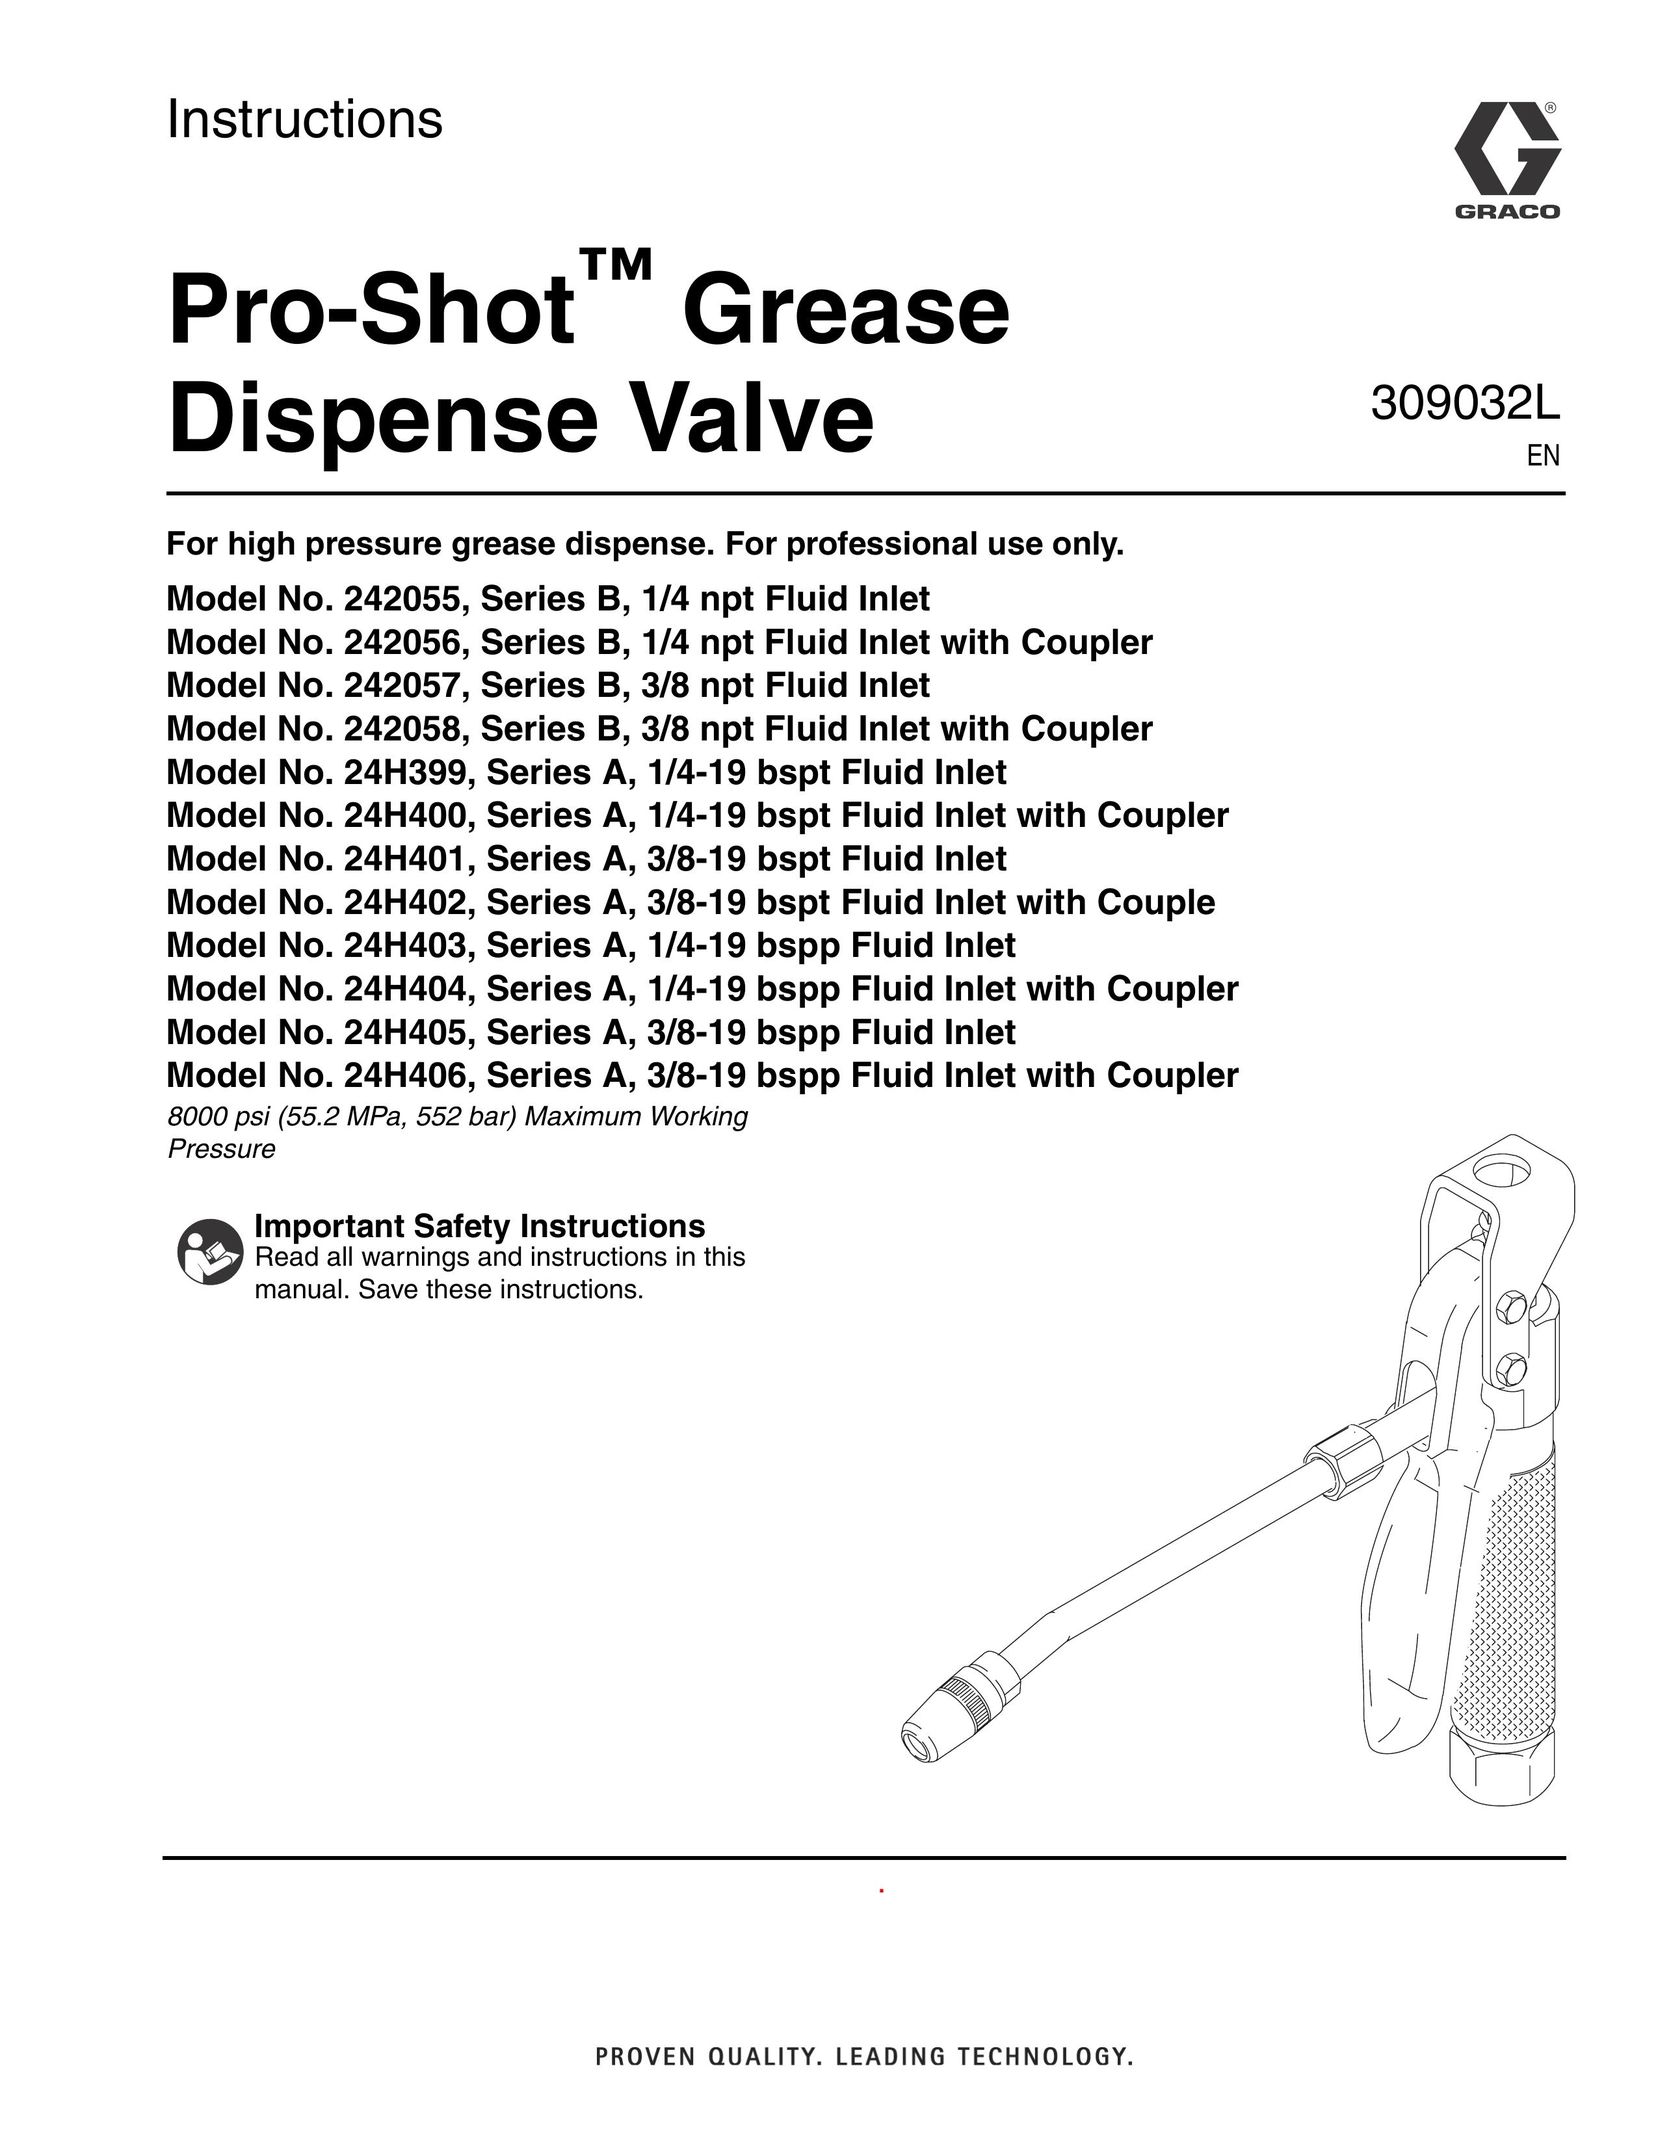 Graco 24H401 Glue Gun User Manual